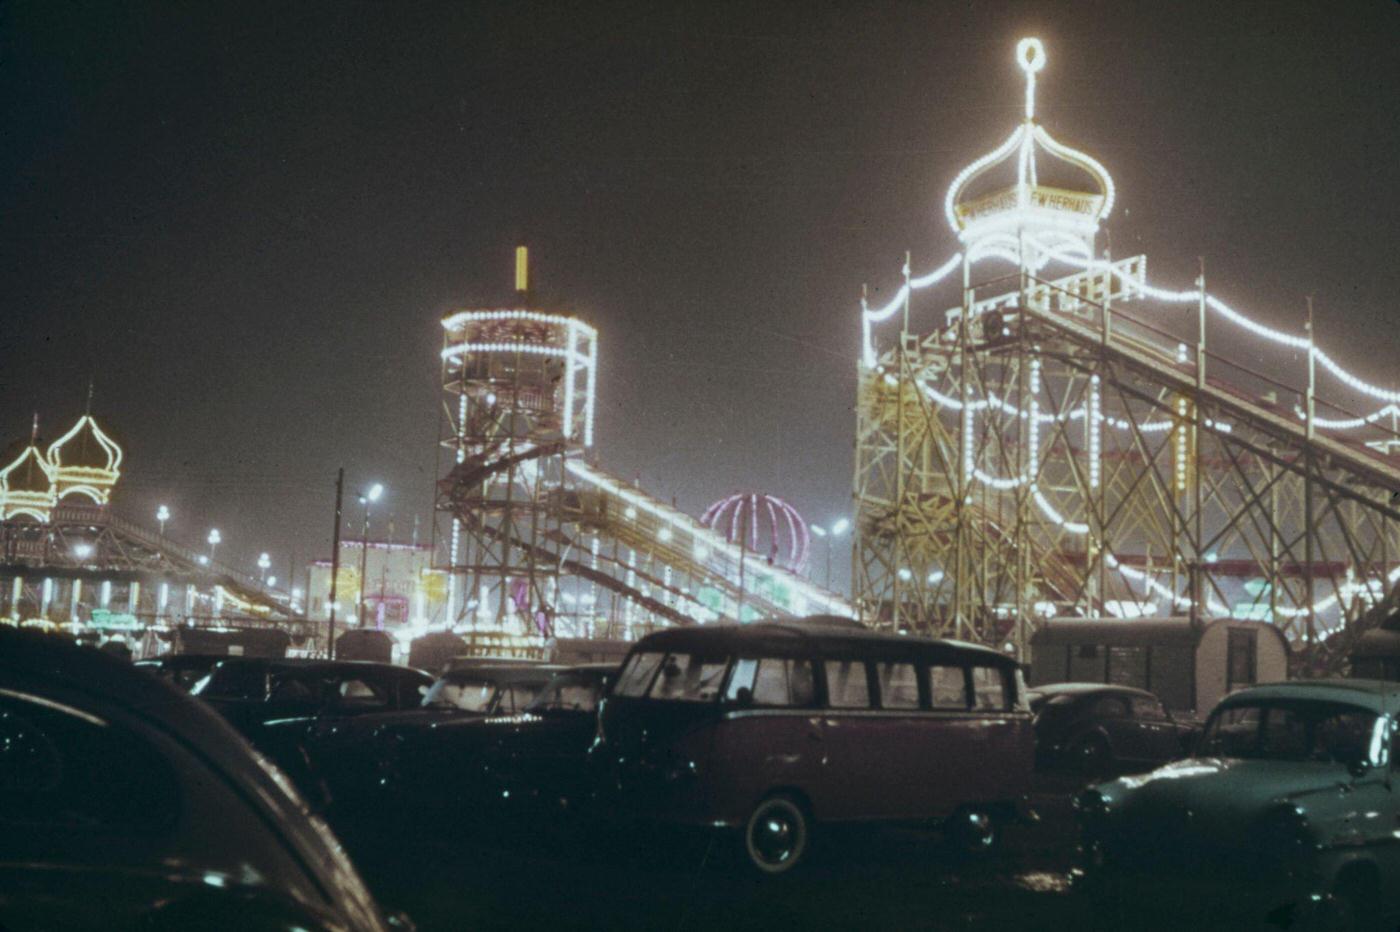 Illuminated fairground rides at Munich Oktoberfest, 1965.